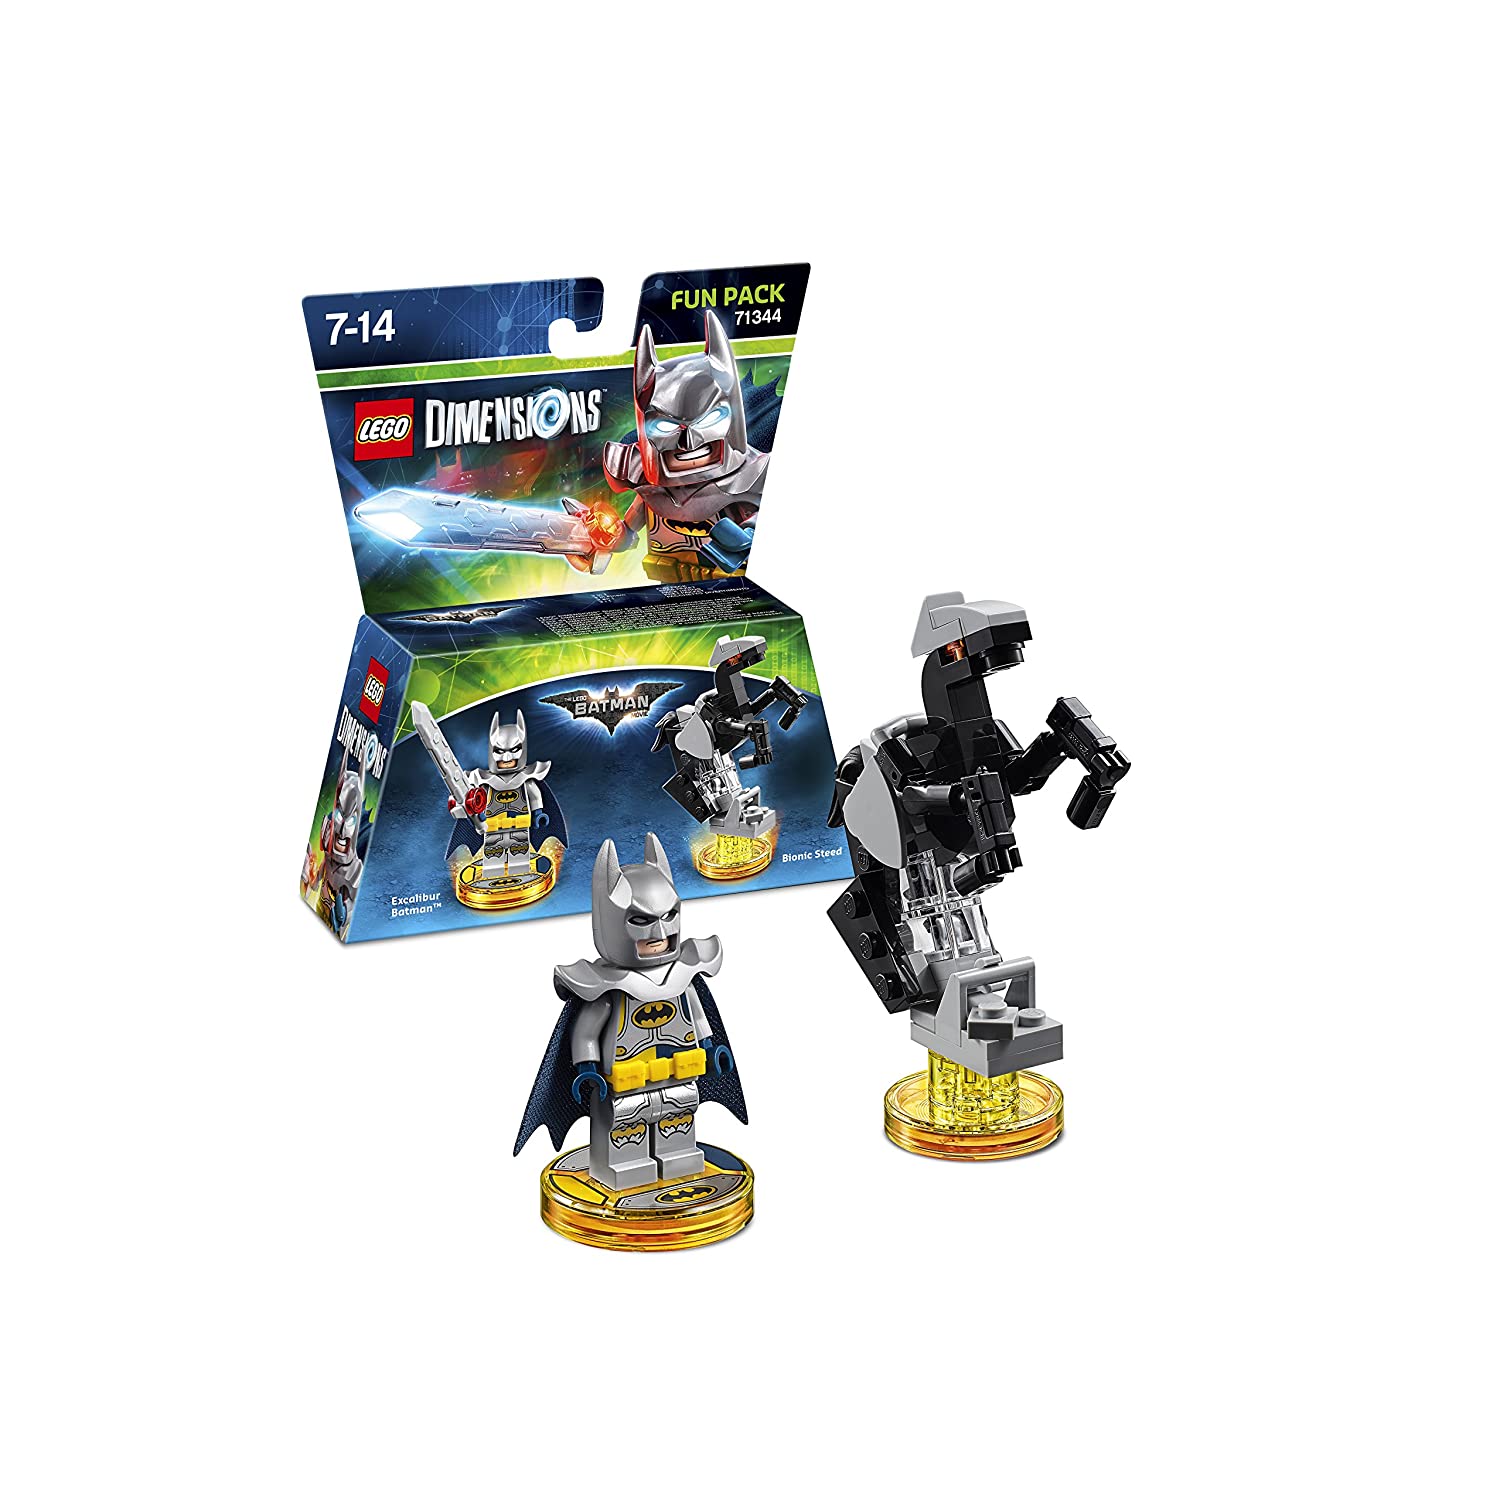 LEGO Dimensions - Fun Pack (71344) - LEGO Batman Movie (Batman, Bionic Steed)